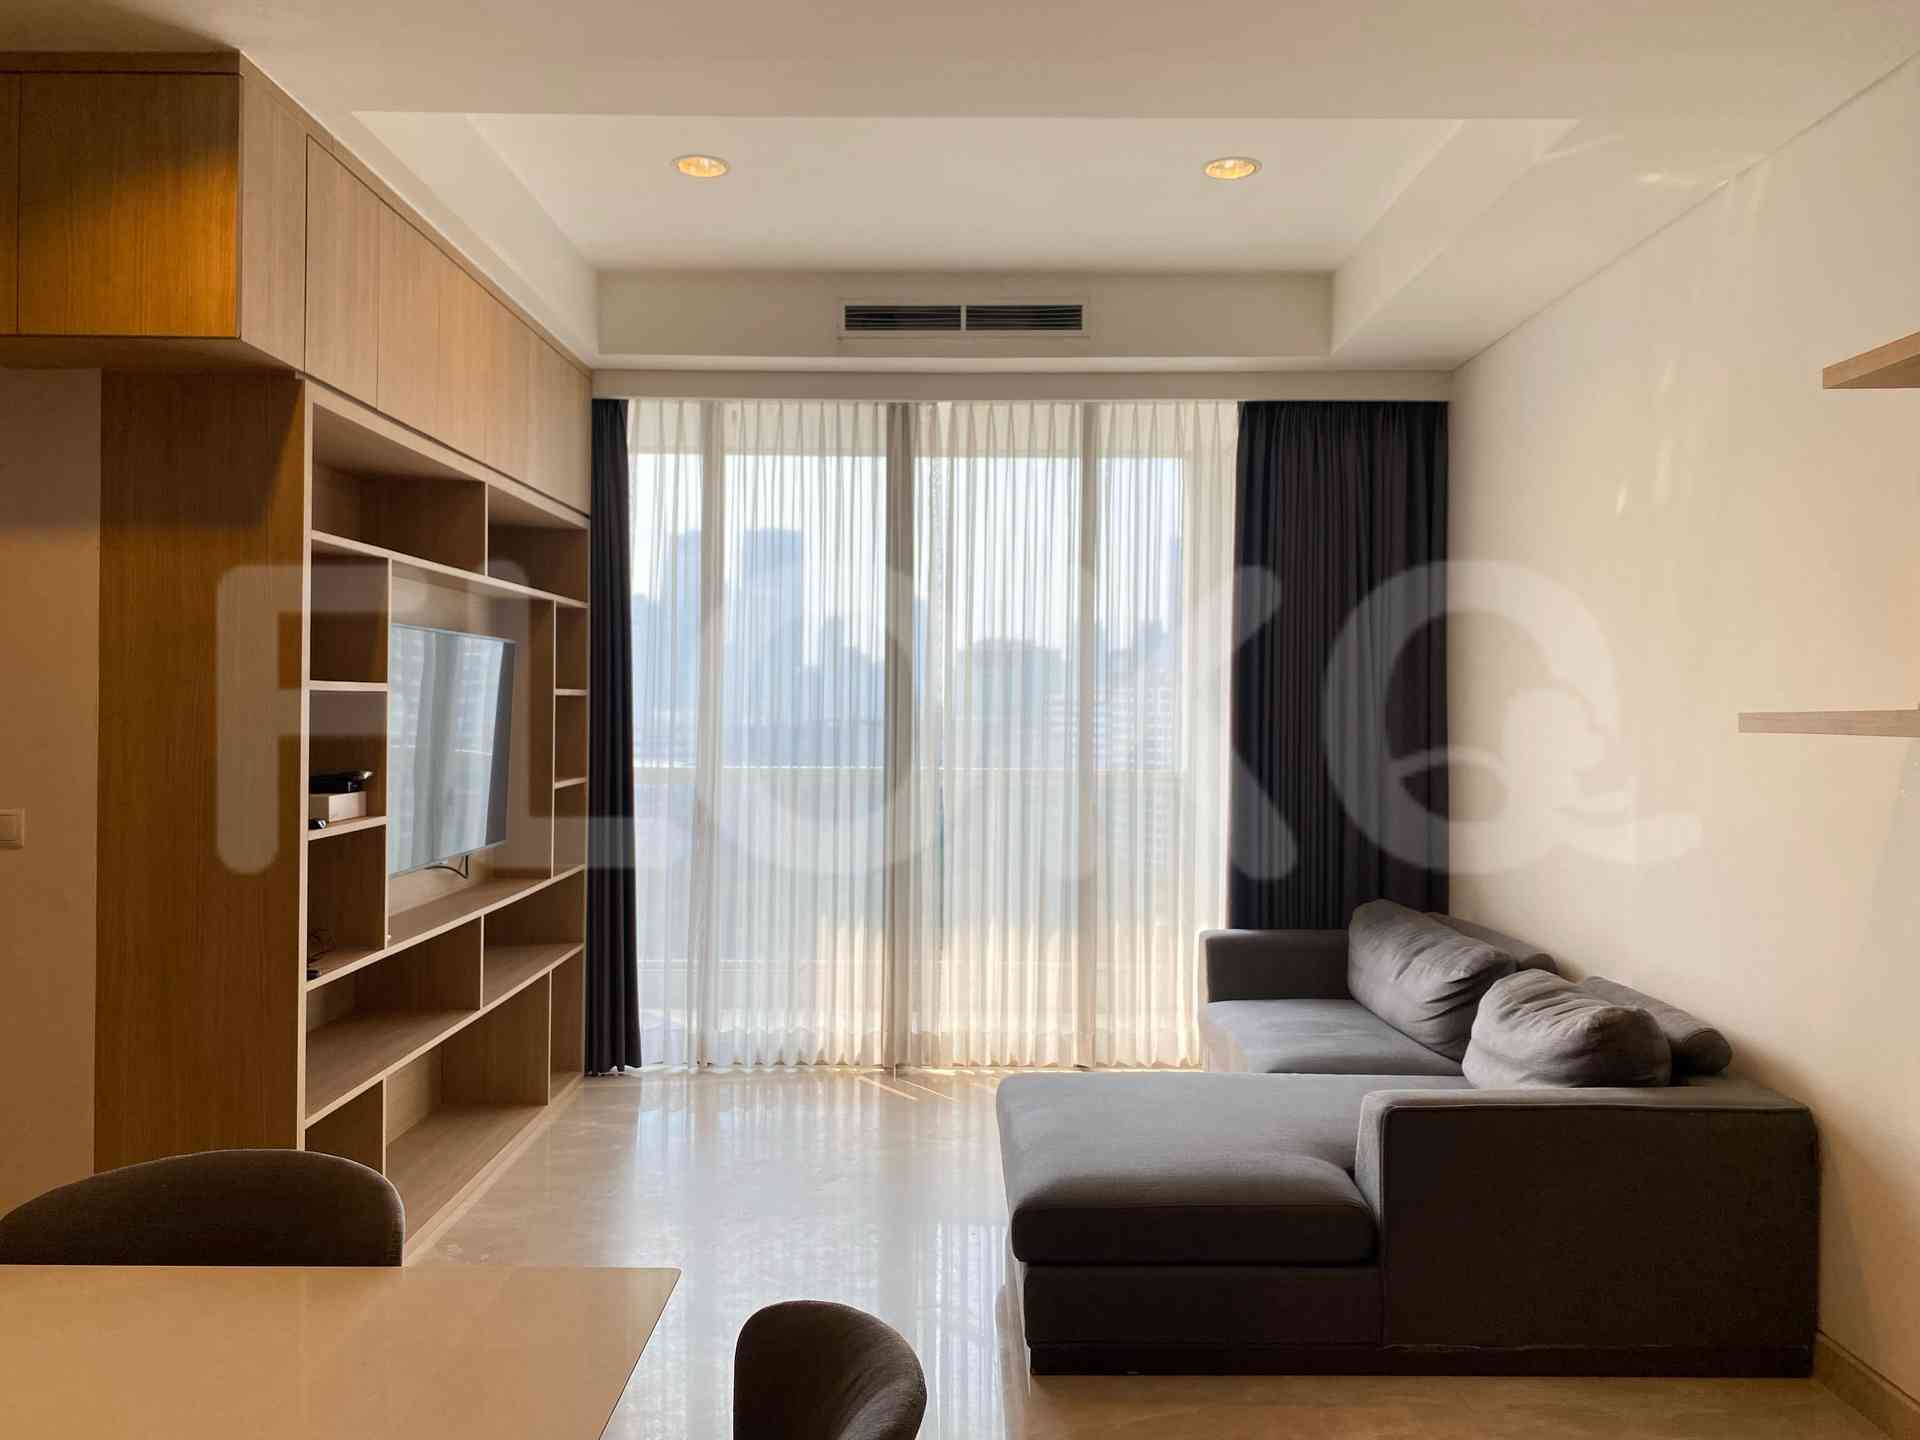 3 Bedroom on 12th Floor for Rent in The Elements Kuningan Apartment - fku633 1